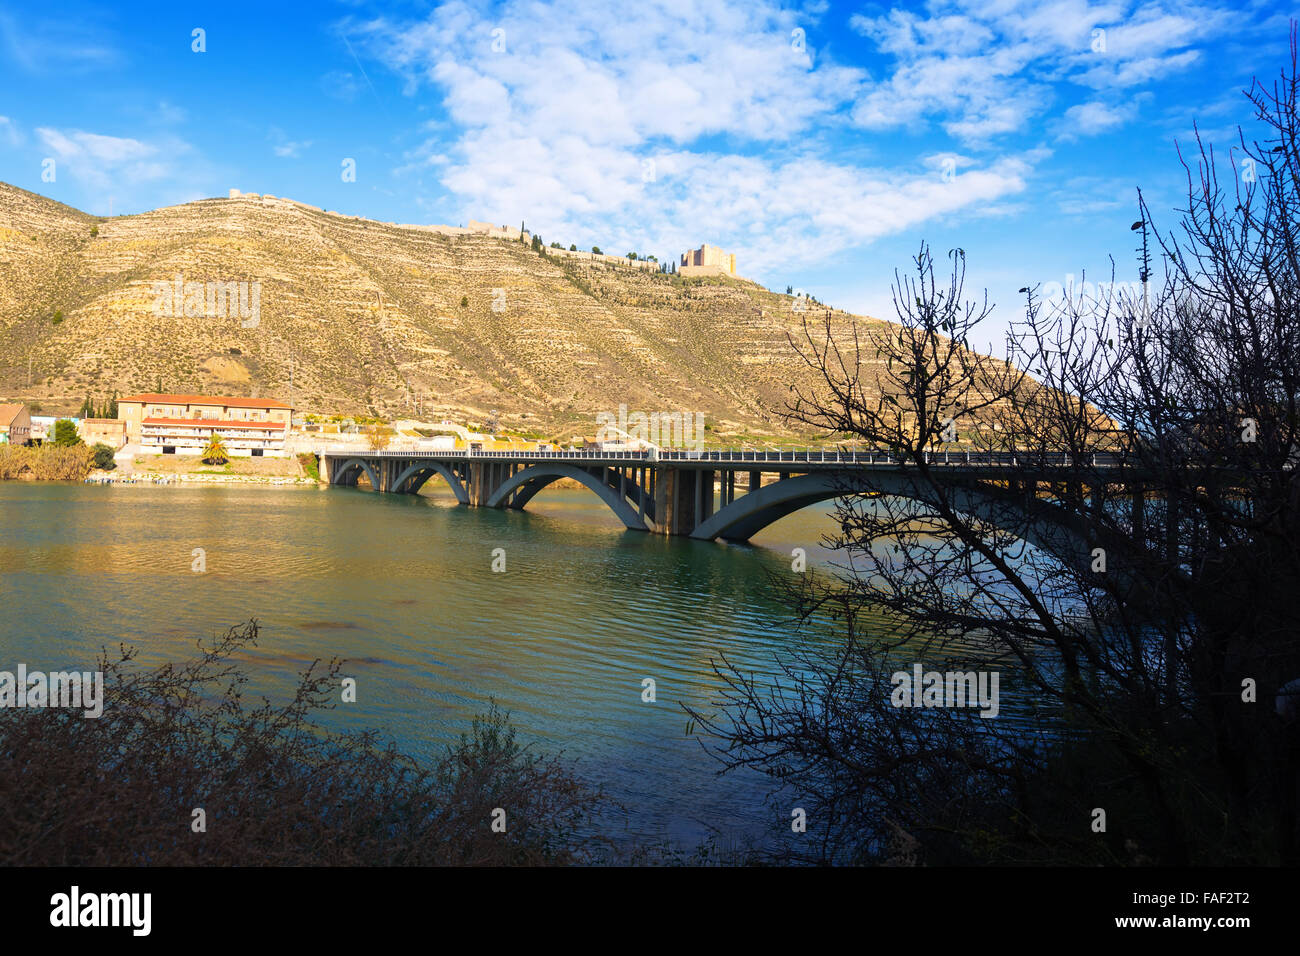 View of Bridge over reservoir of Mequinenza. Aragon, Spain Stock Photo